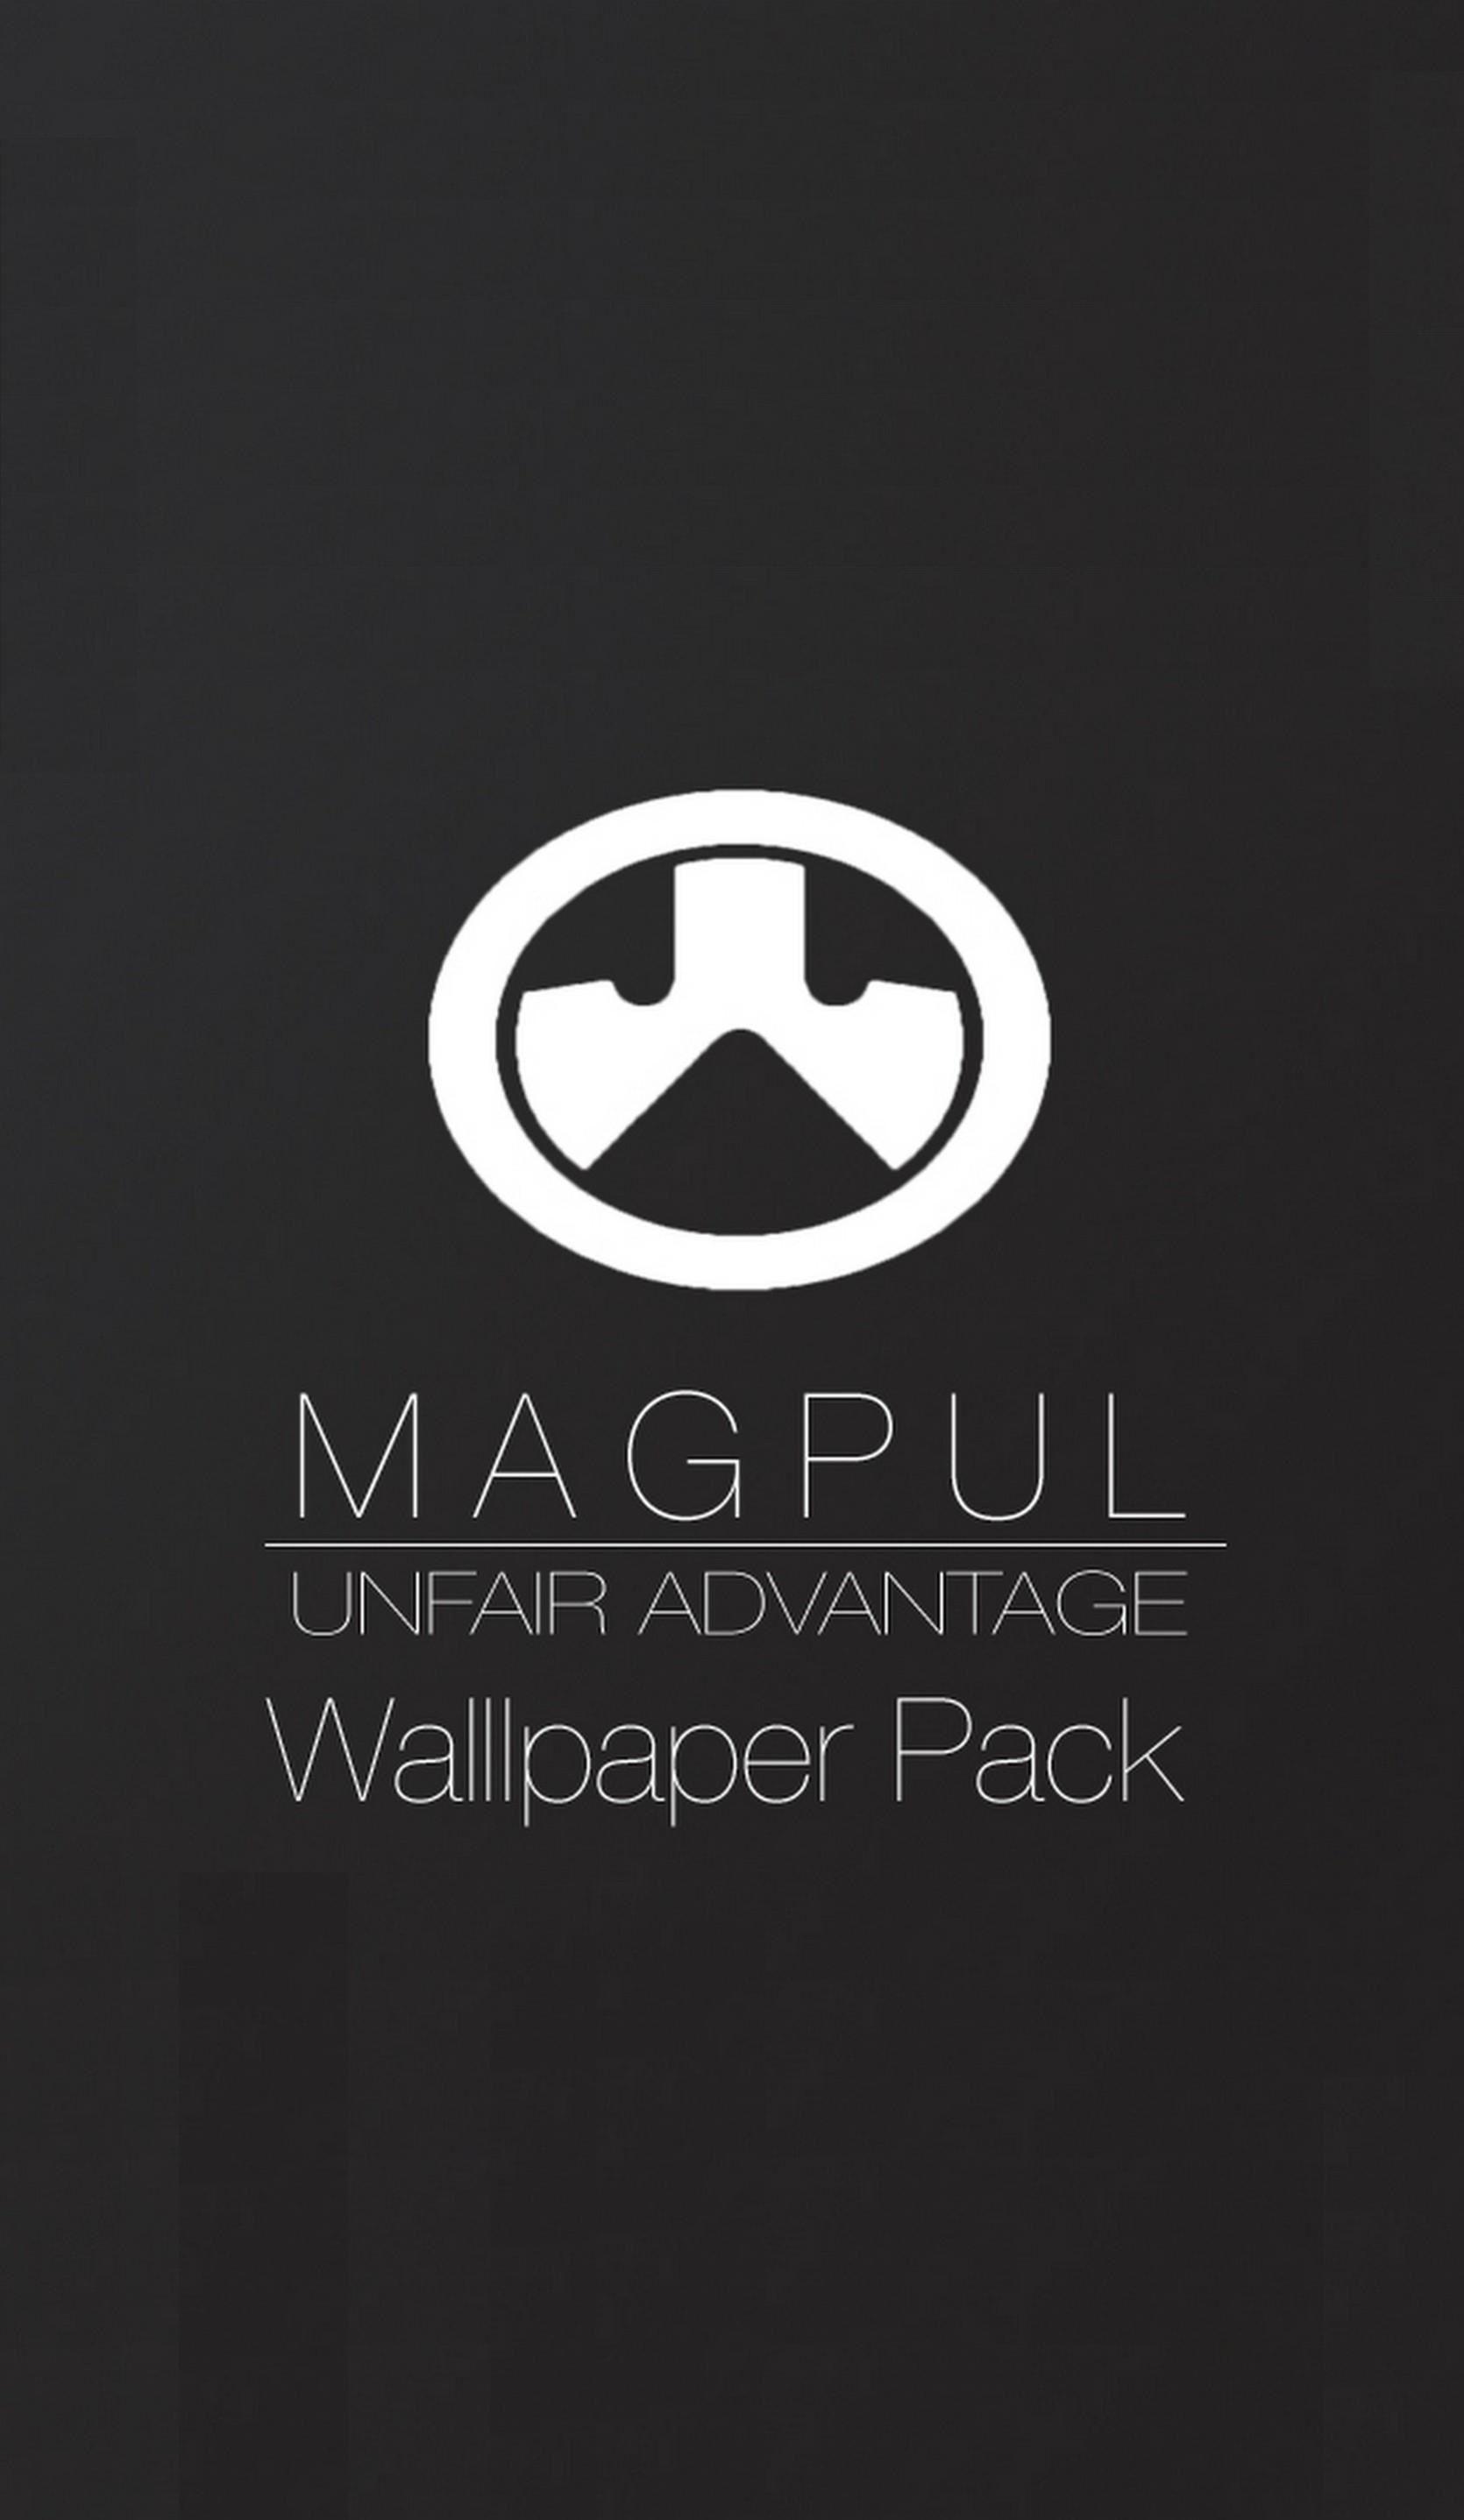 magpul iphone wallpaper